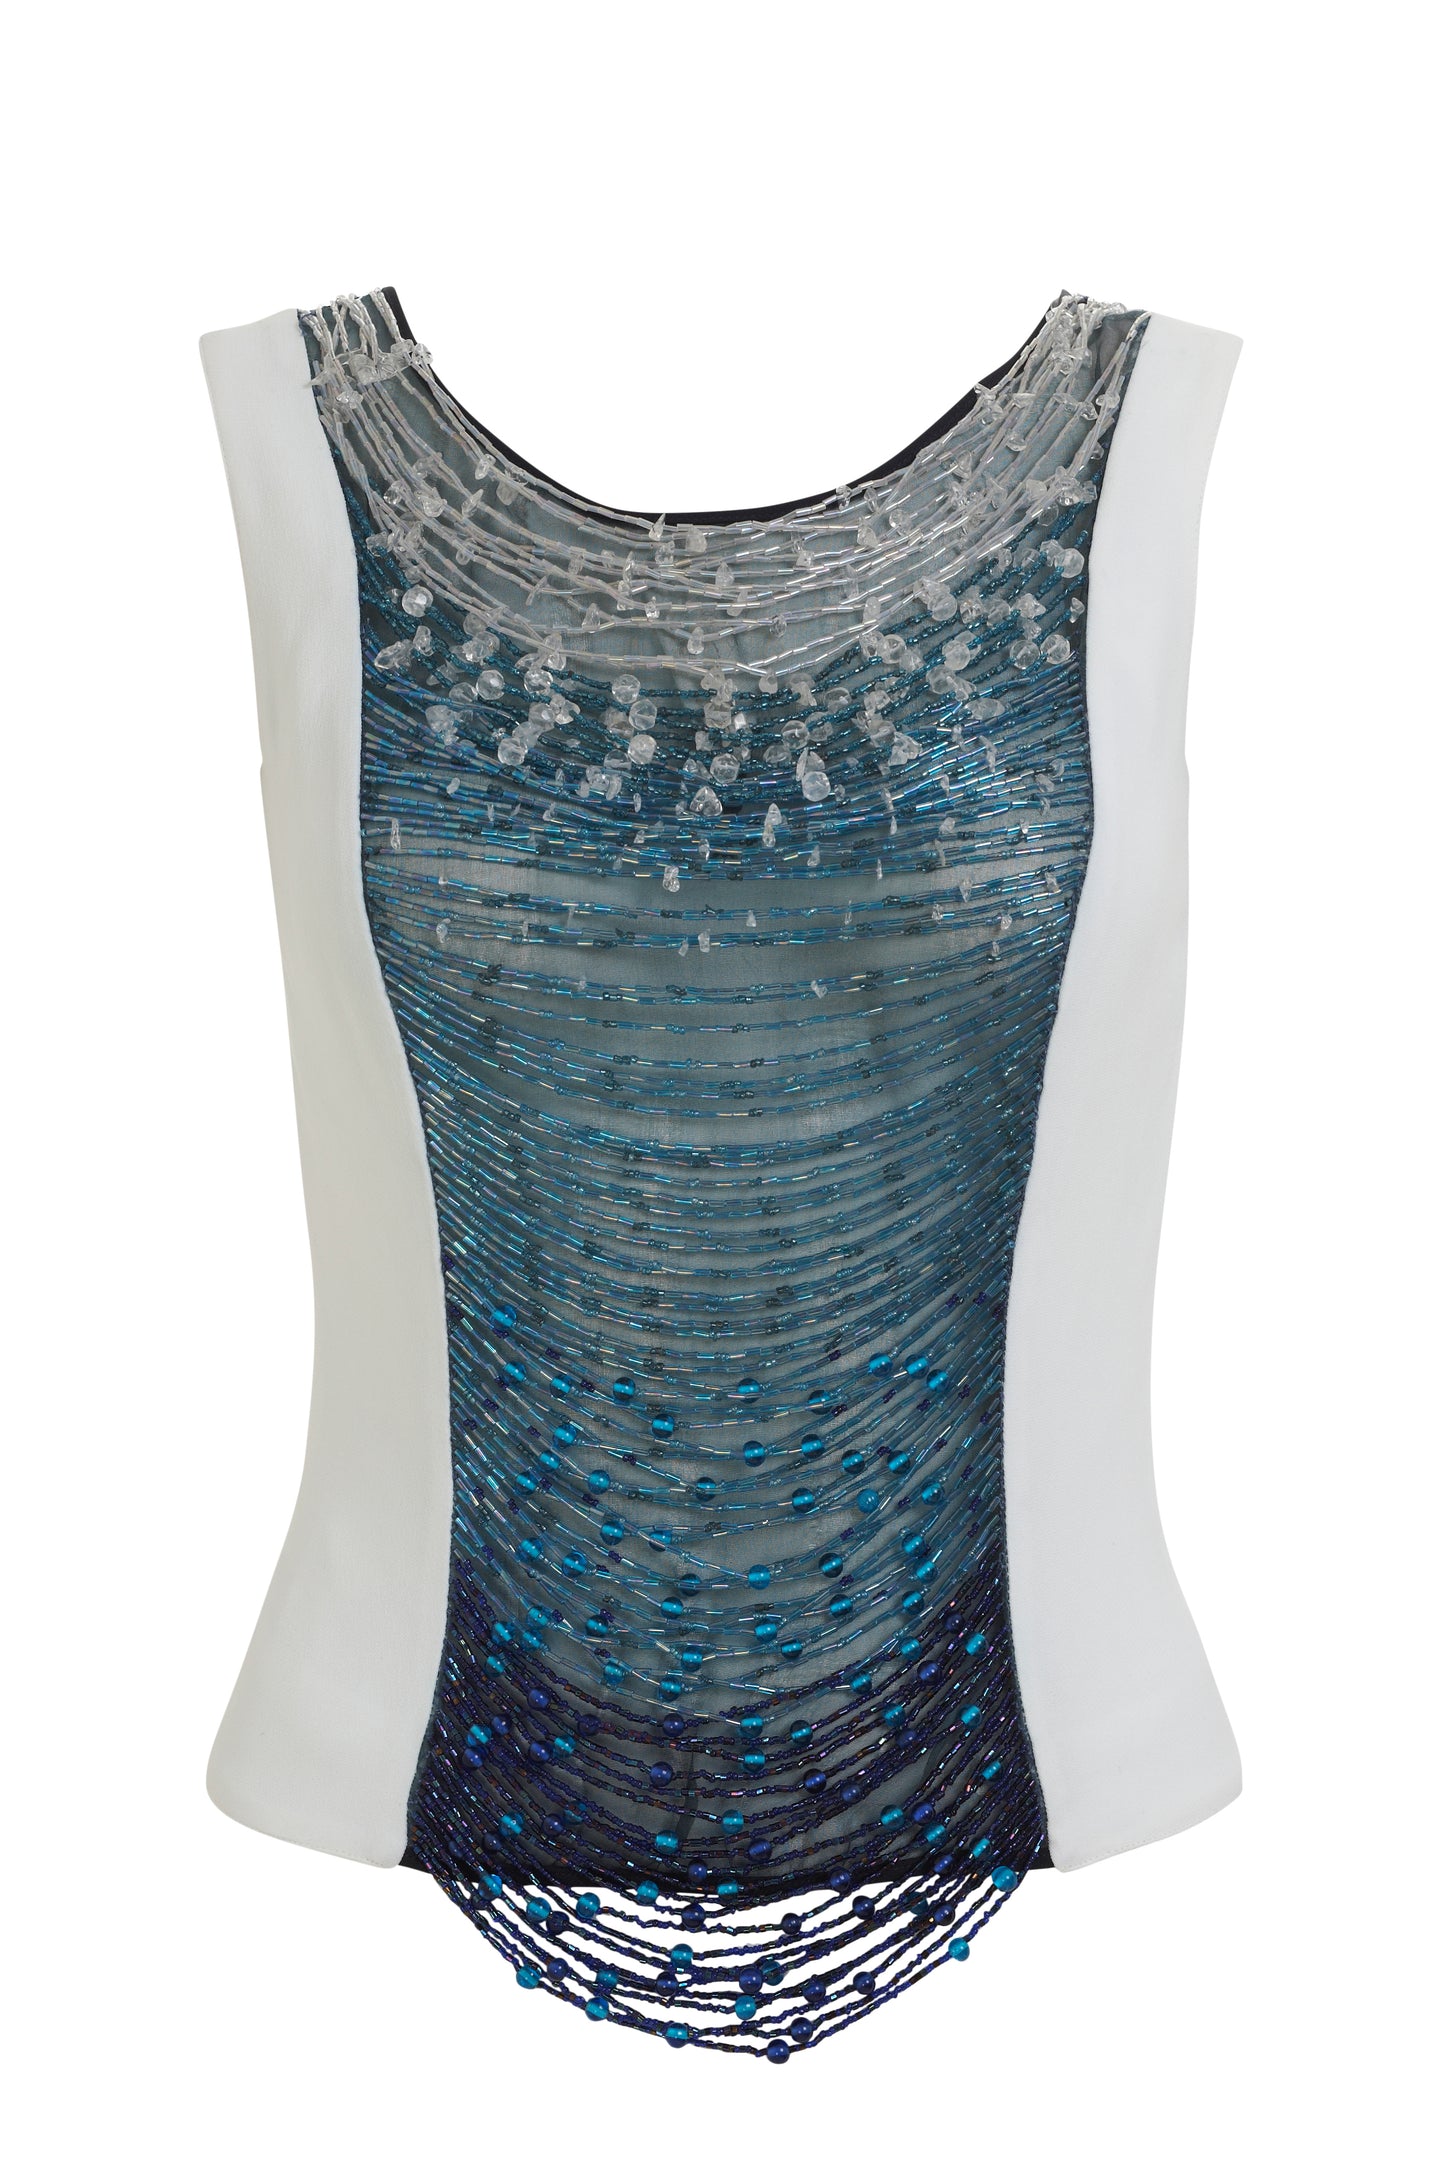 Alma white sleeveless top with draped blue crystal beading